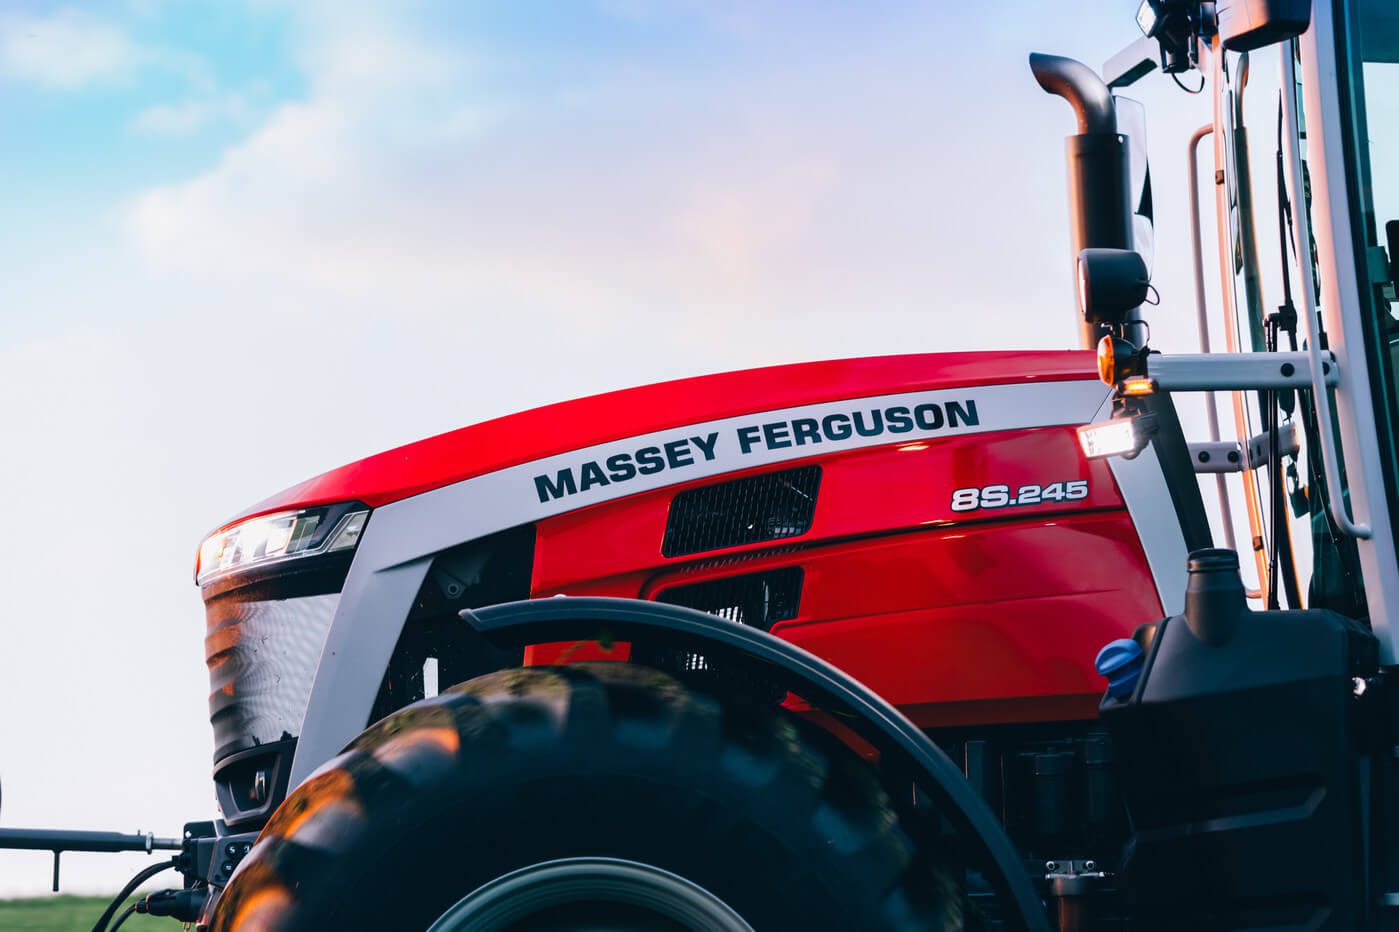 Massey Ferguson 8S 1